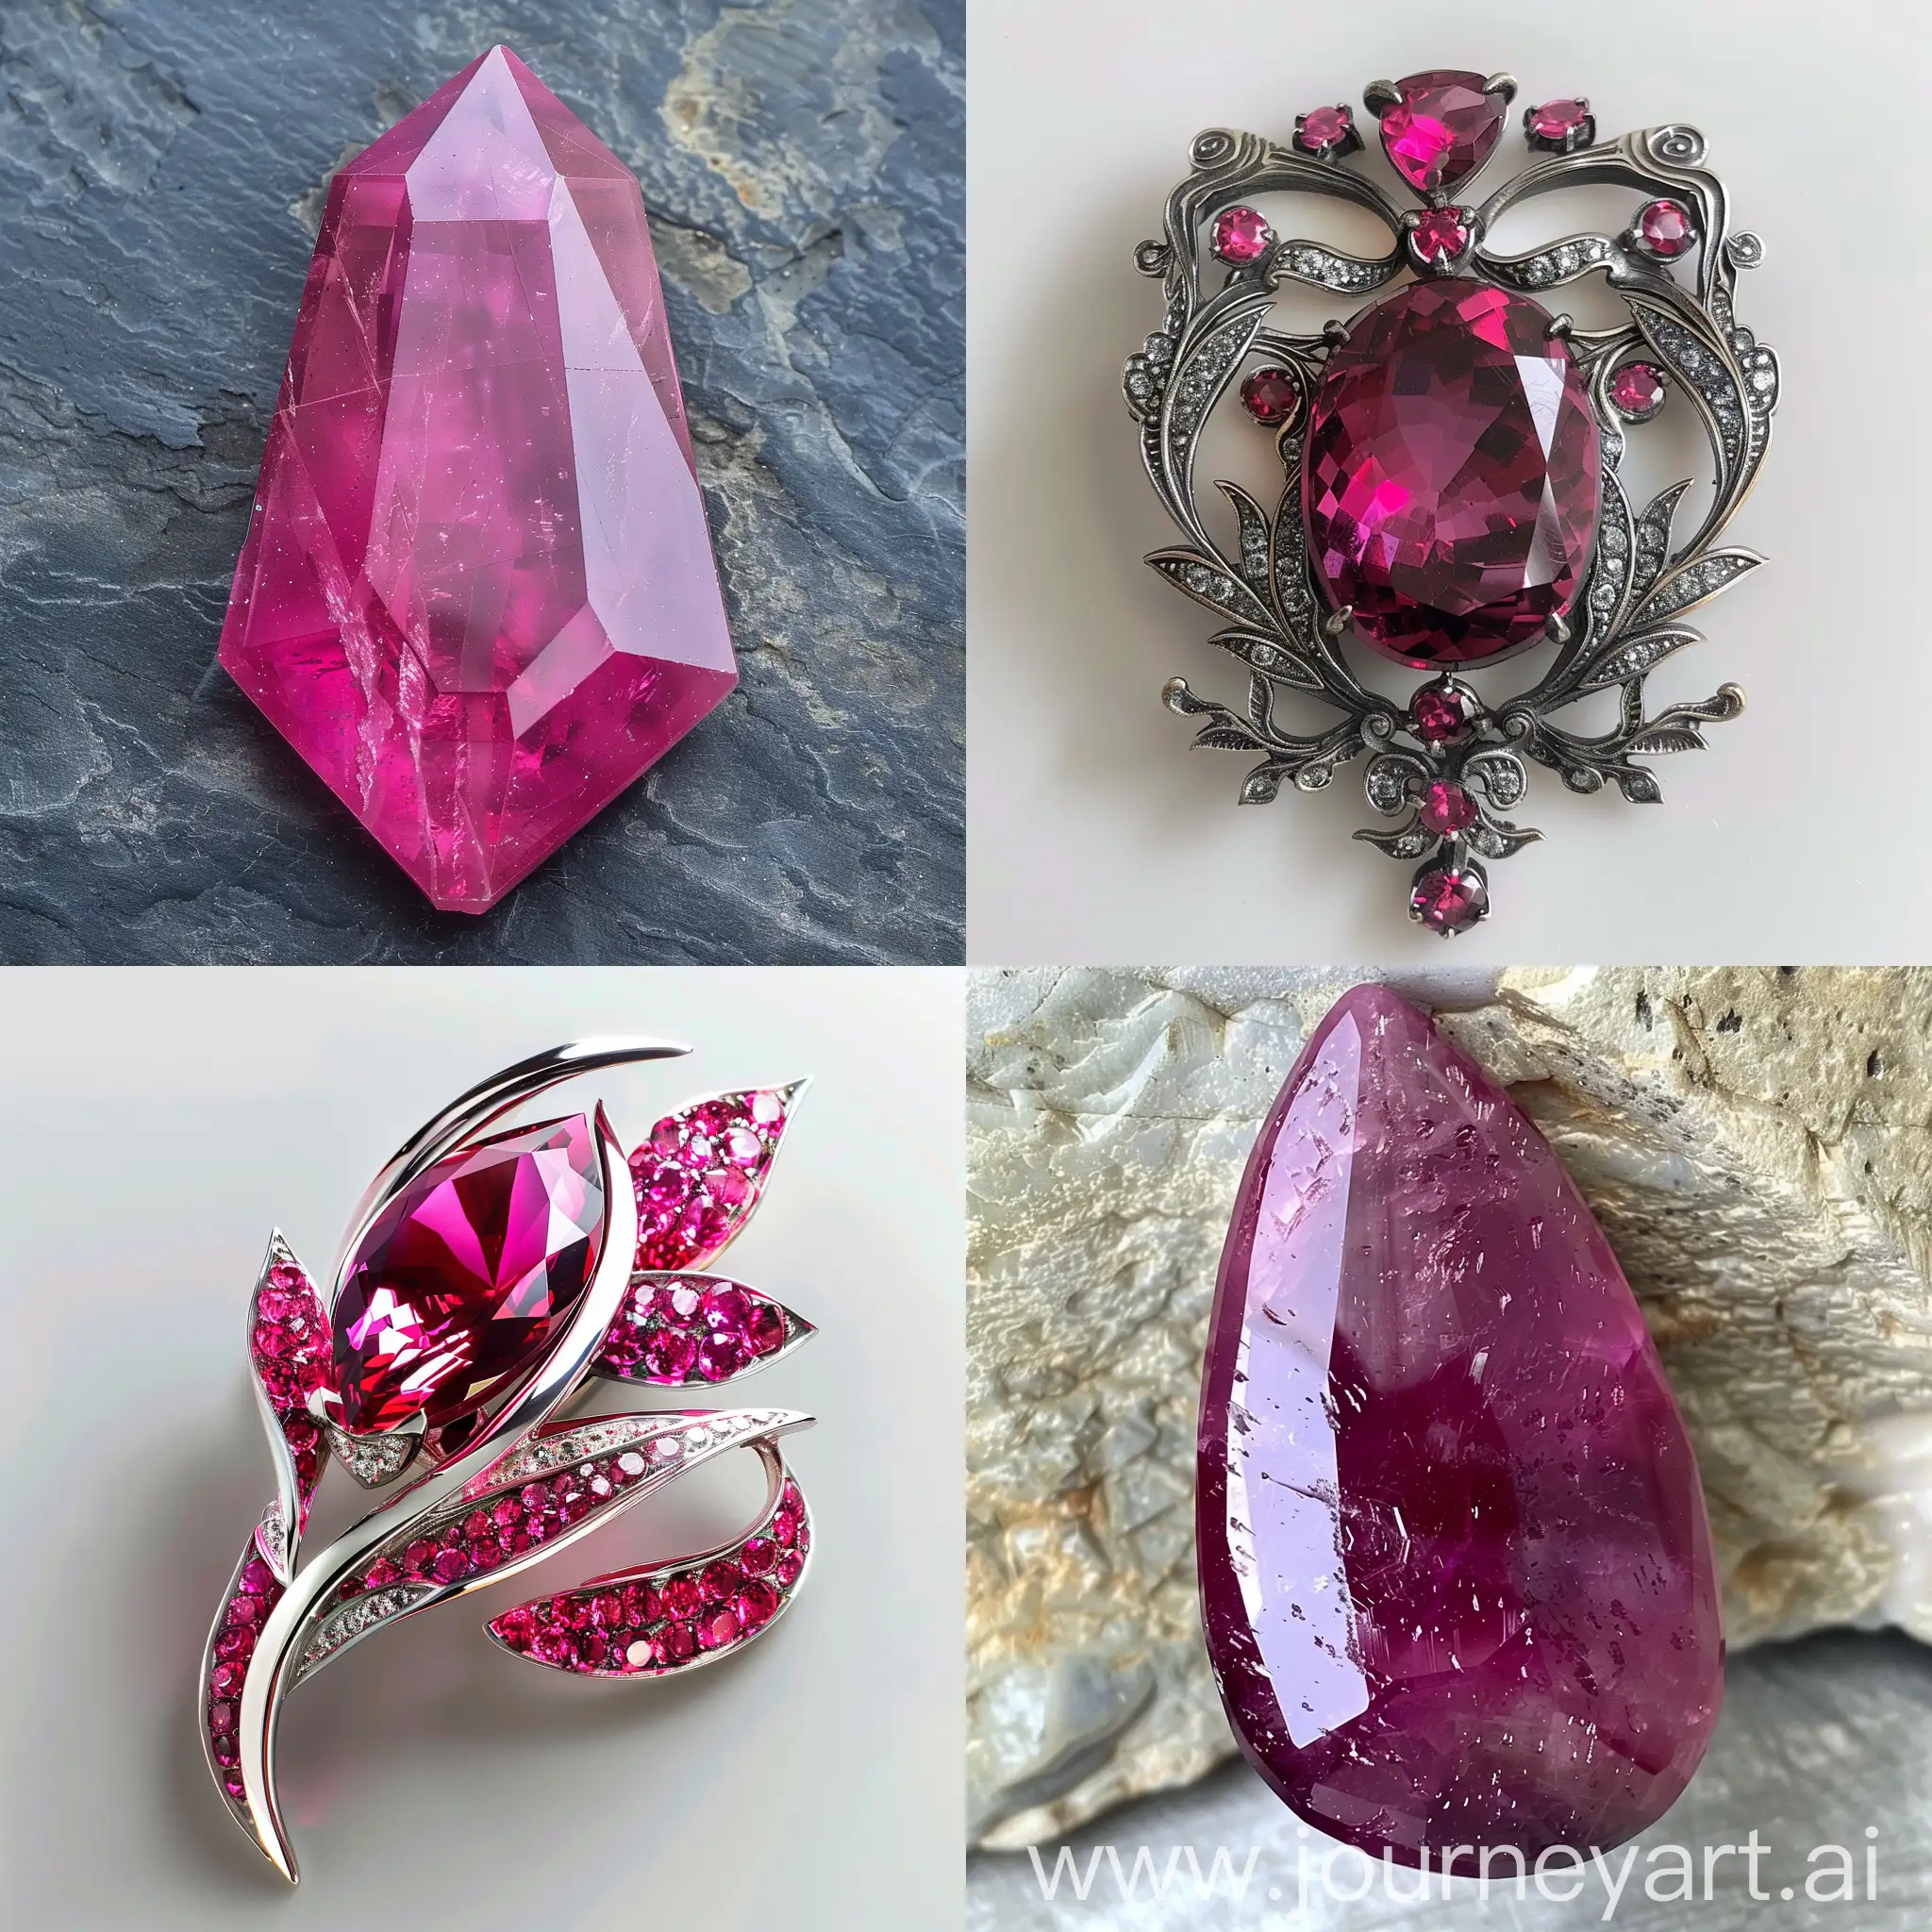 Vibrant-Ruby-Gemstone-Artwork